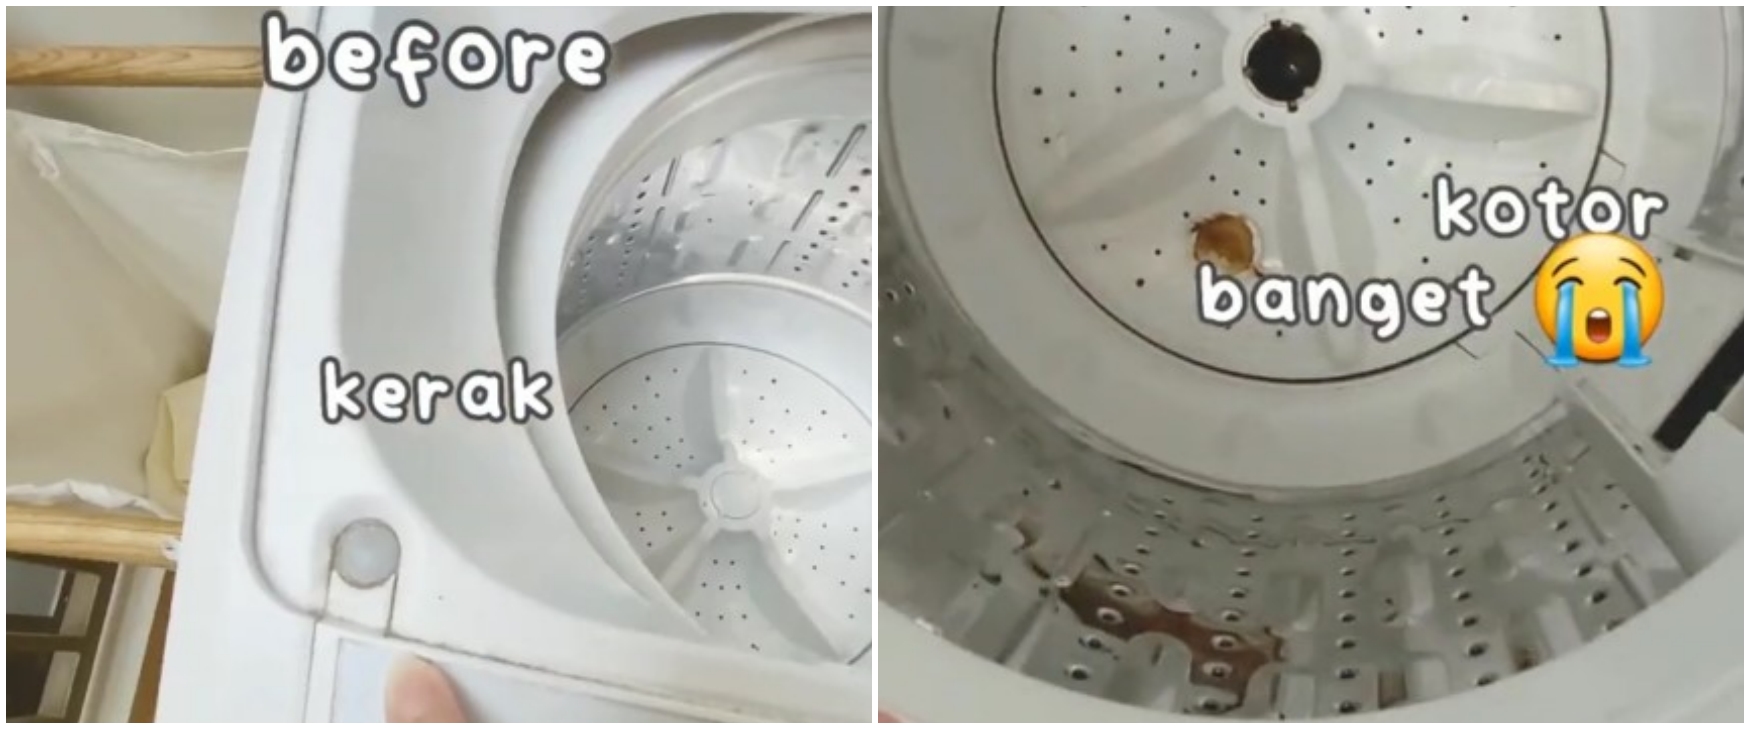 Hanya manfaatkan 3 bahan dapur, begini cara ampuh bersihkan kotoran dan kerak kuning di mesin cuci